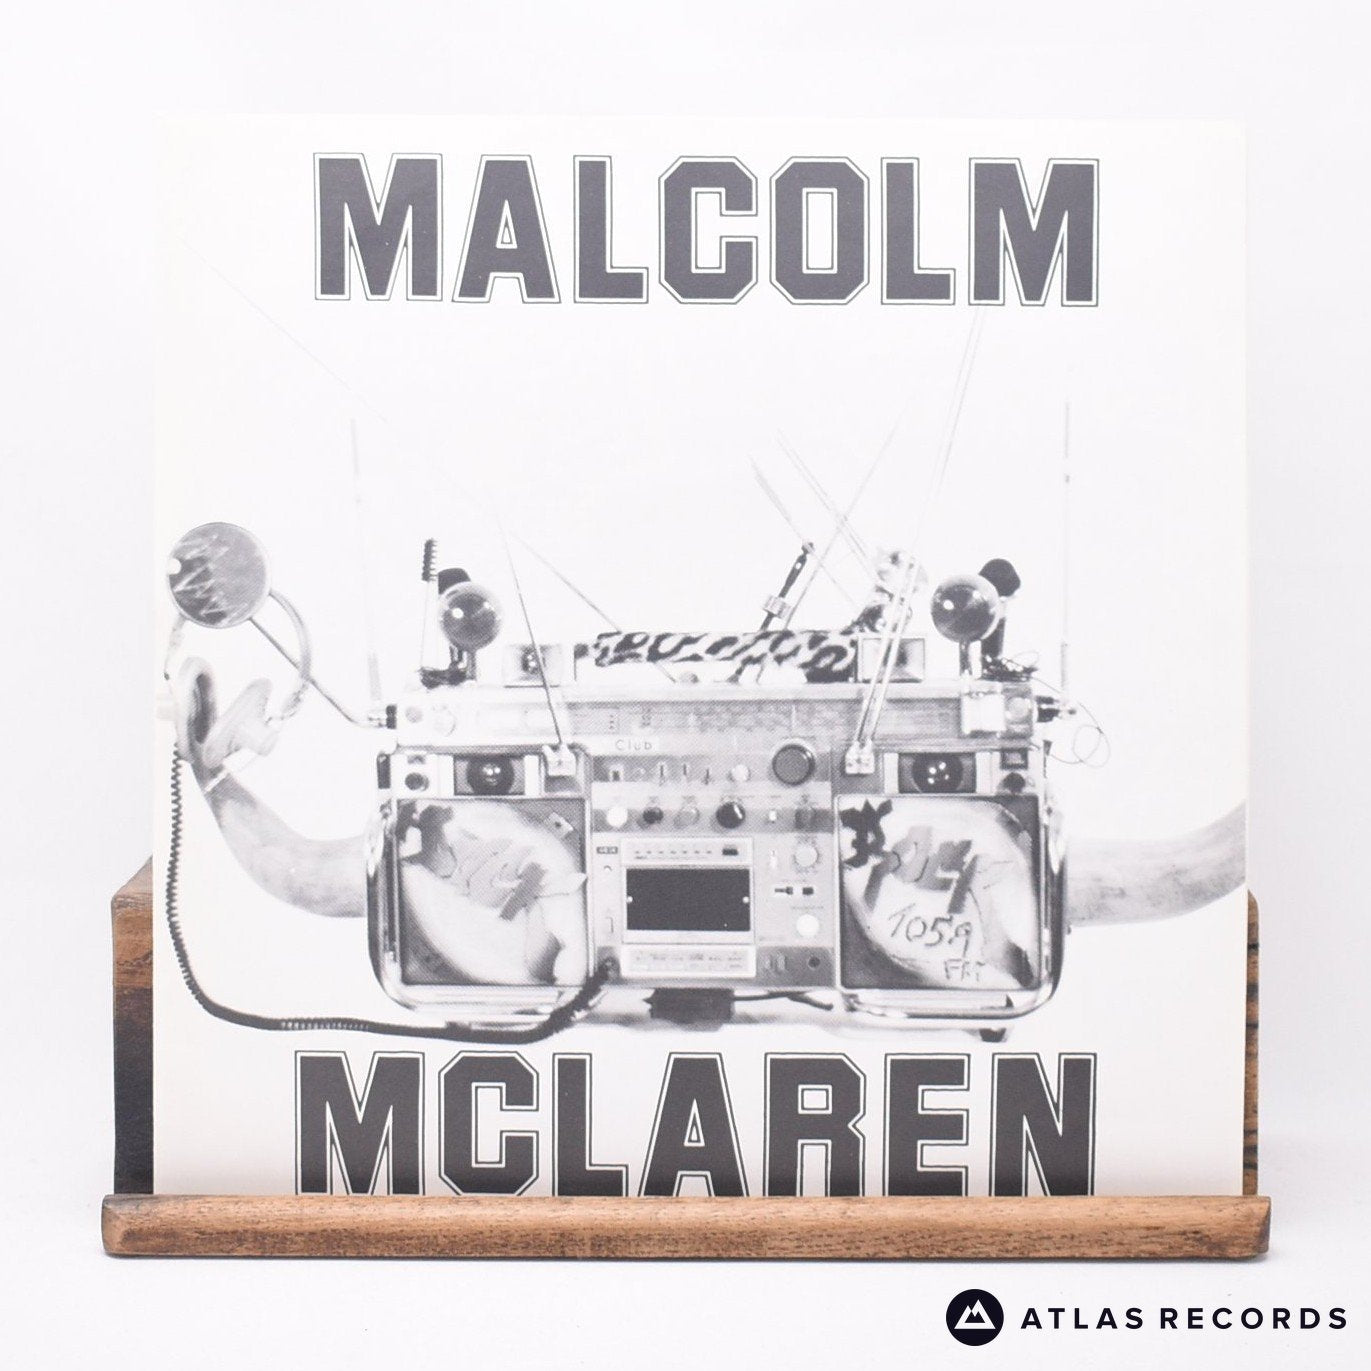 Malcolm McLaren - Duck Rock - Lyric Sheet LP Vinyl Record - EX/VG+